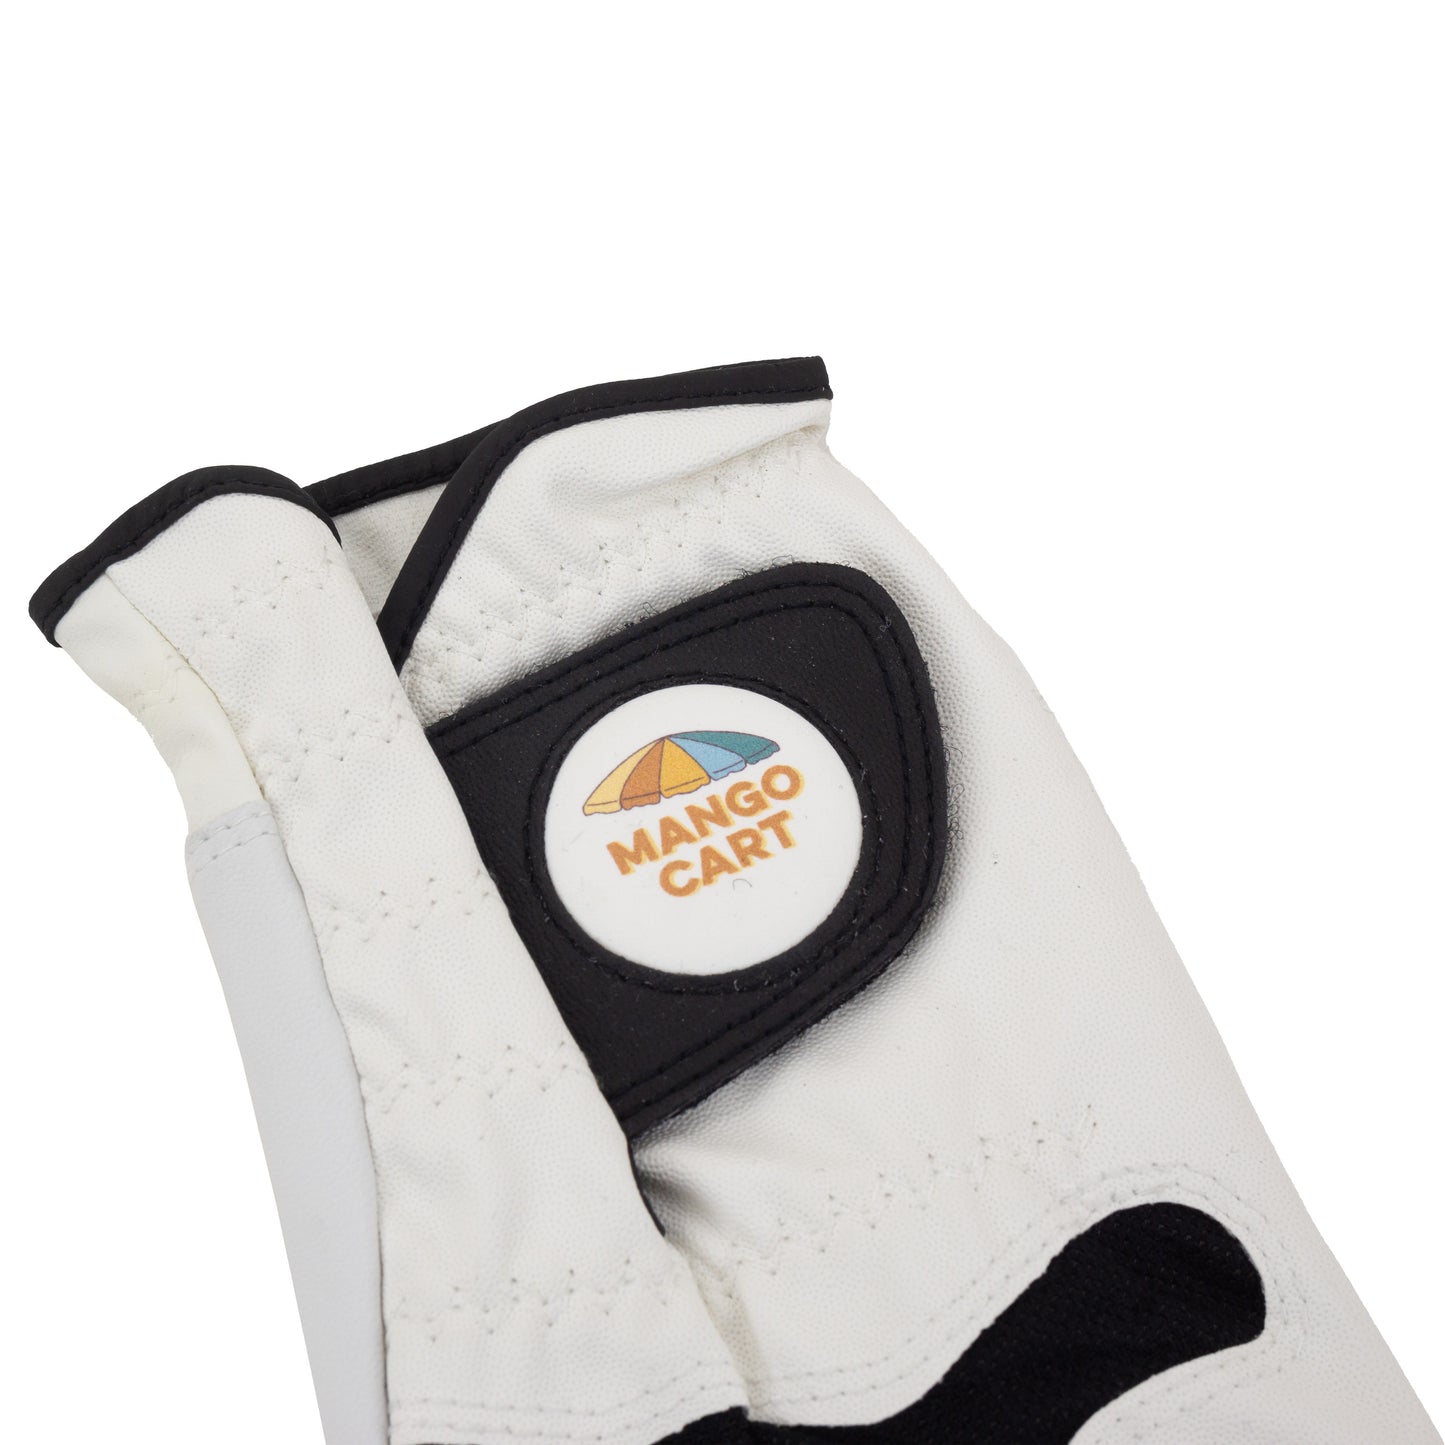 Mango Cart Signature Series Golf Glove